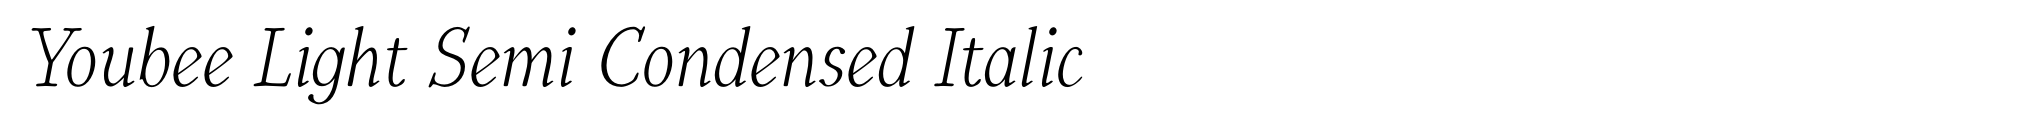 Youbee Light Semi Condensed Italic image